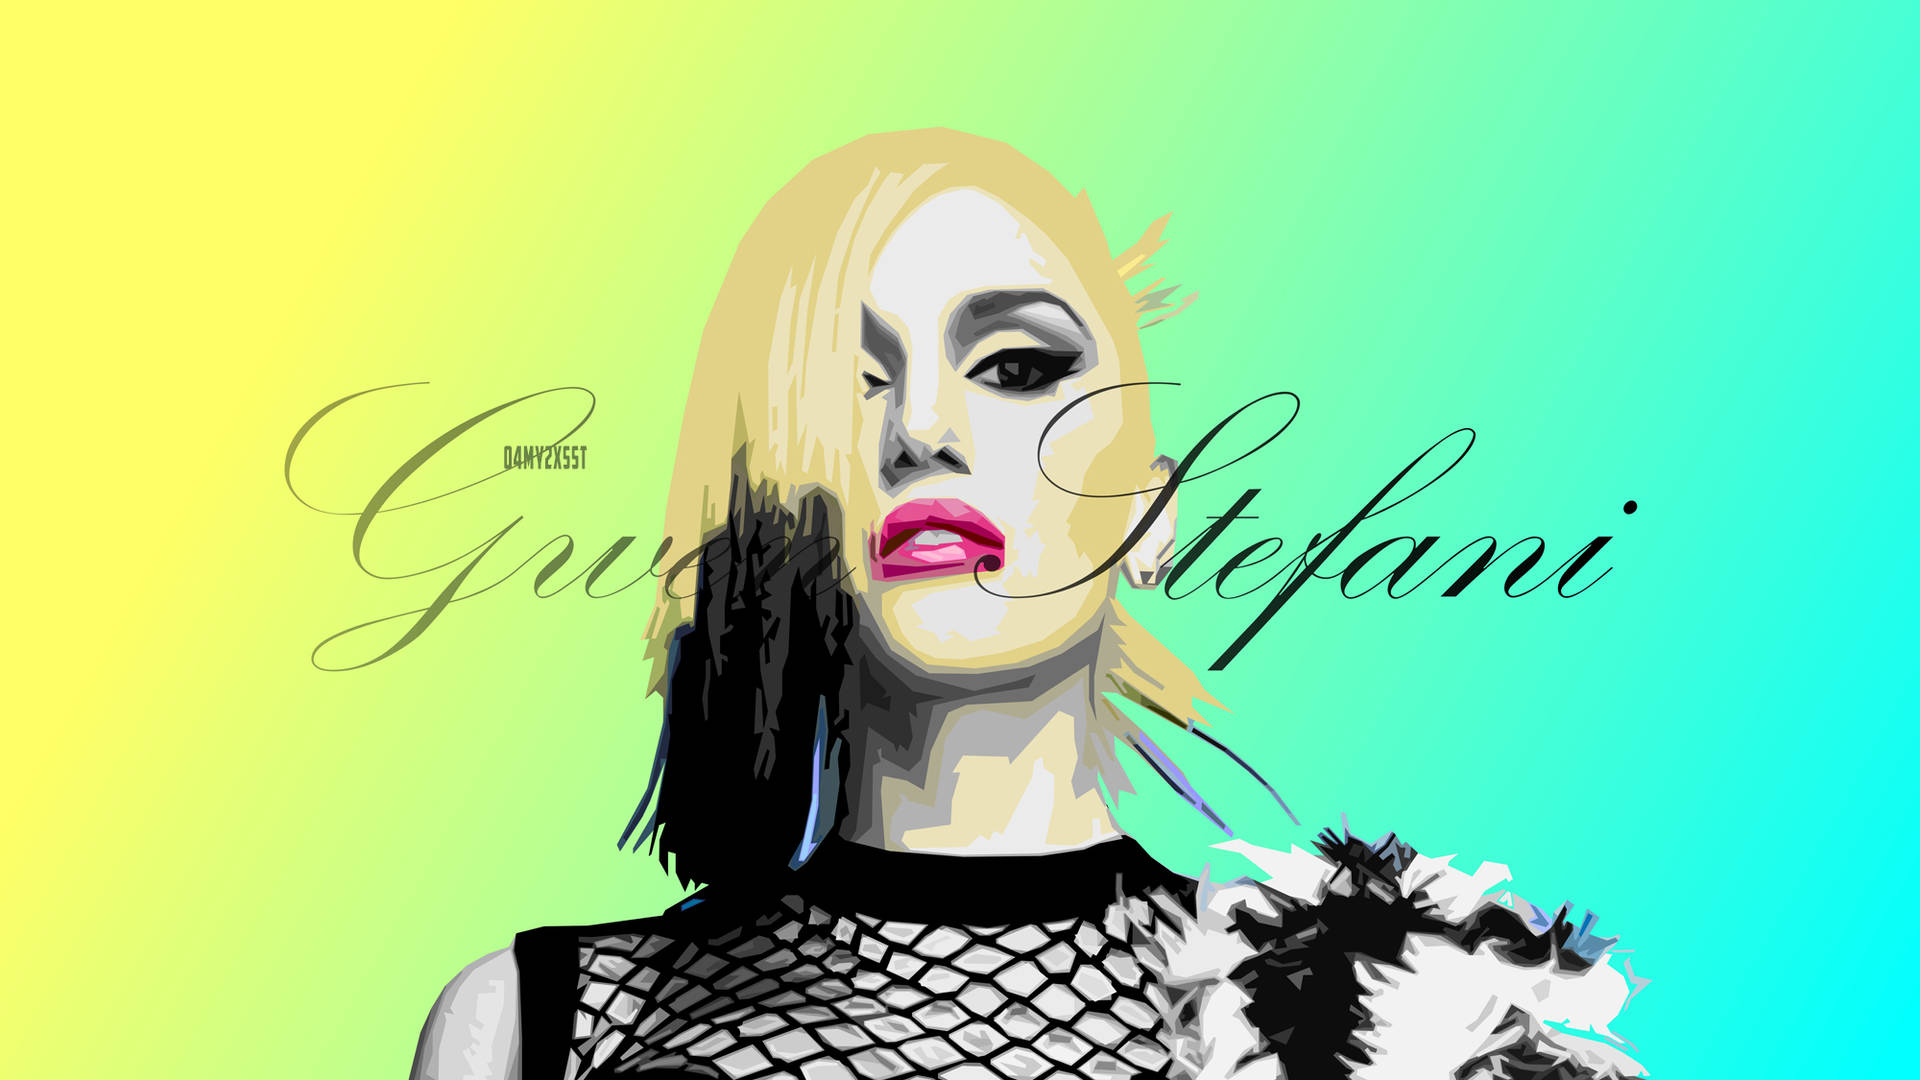 Gwen Stefani Pop Digital Art Background